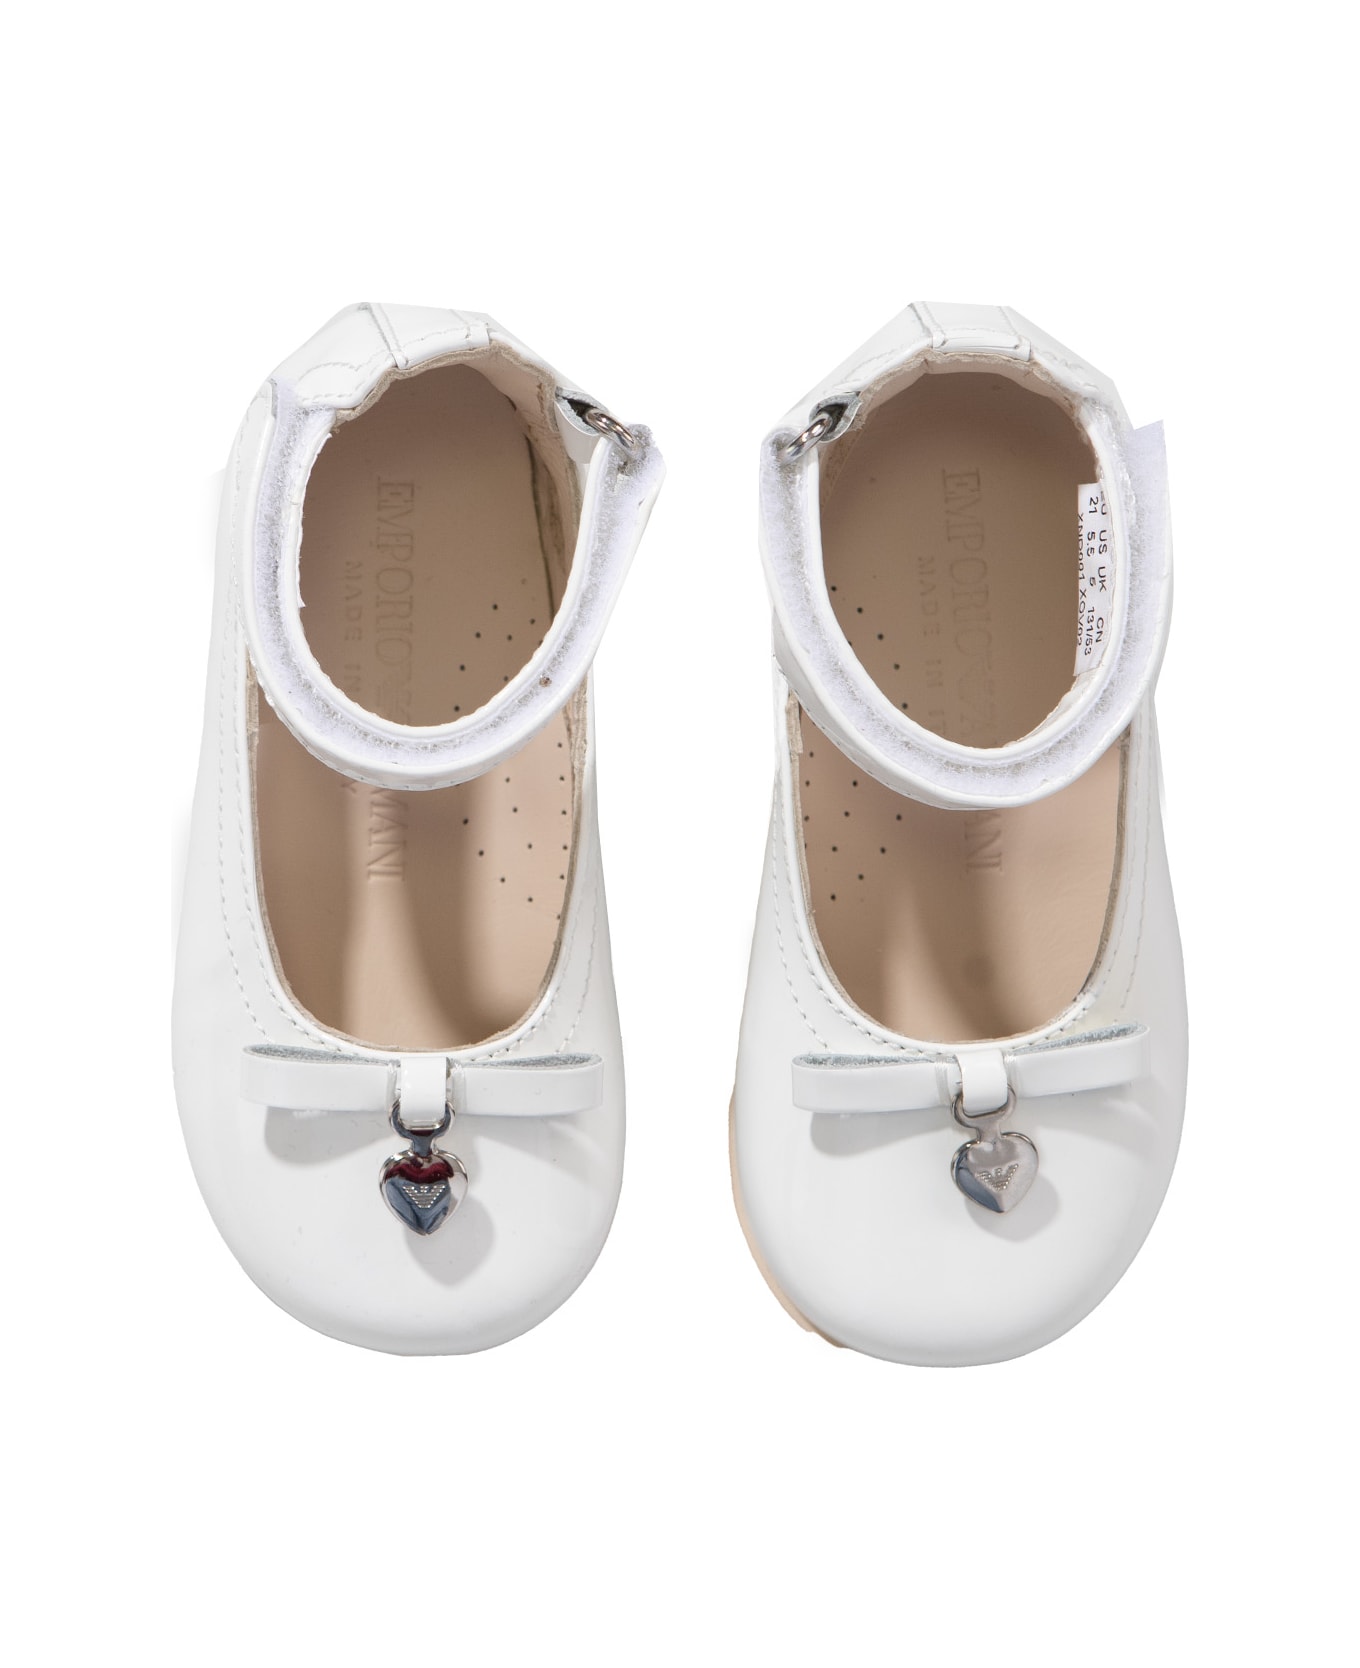 Emporio Armani Leather Shoes - White